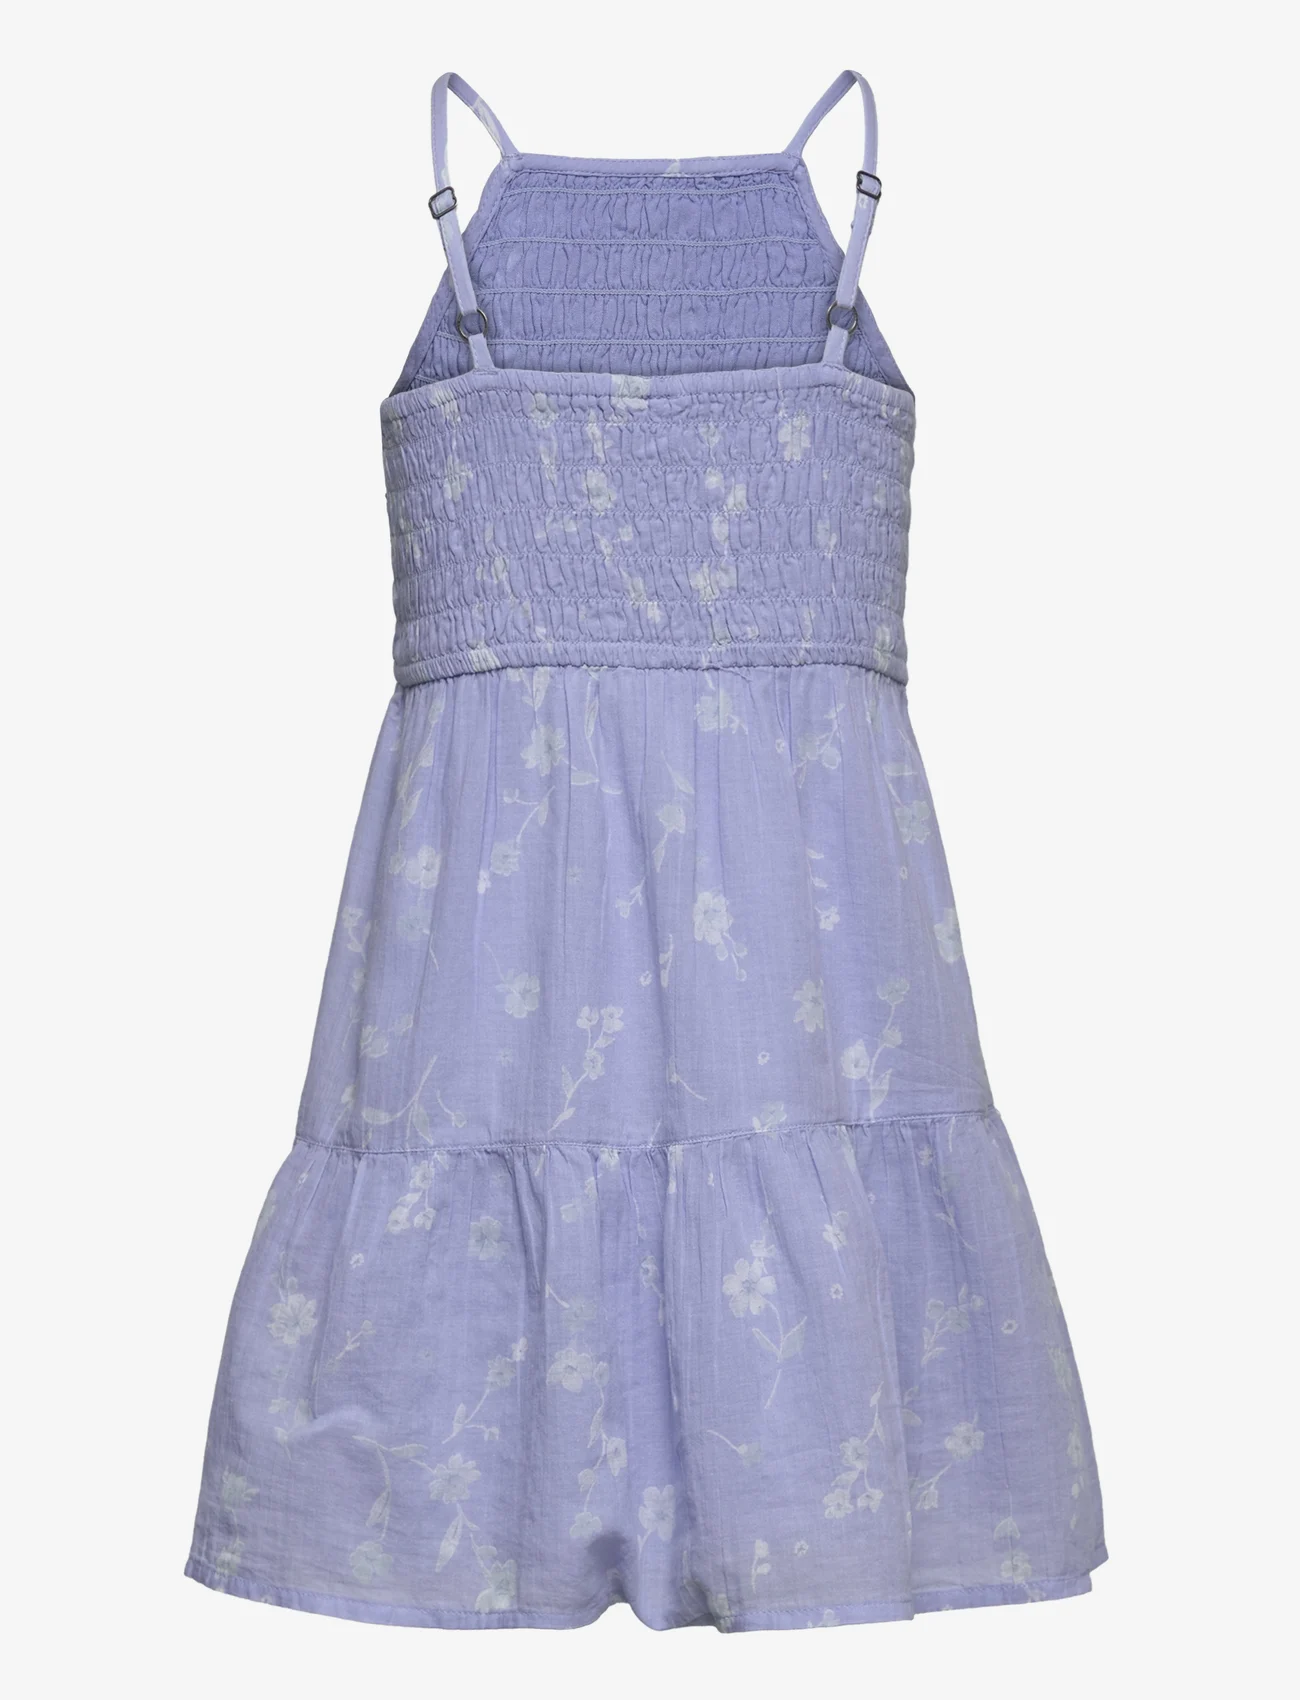 Abercrombie & Fitch - kids GIRLS DRESSES - kurzärmelige freizeitkleider - blue floral - 1